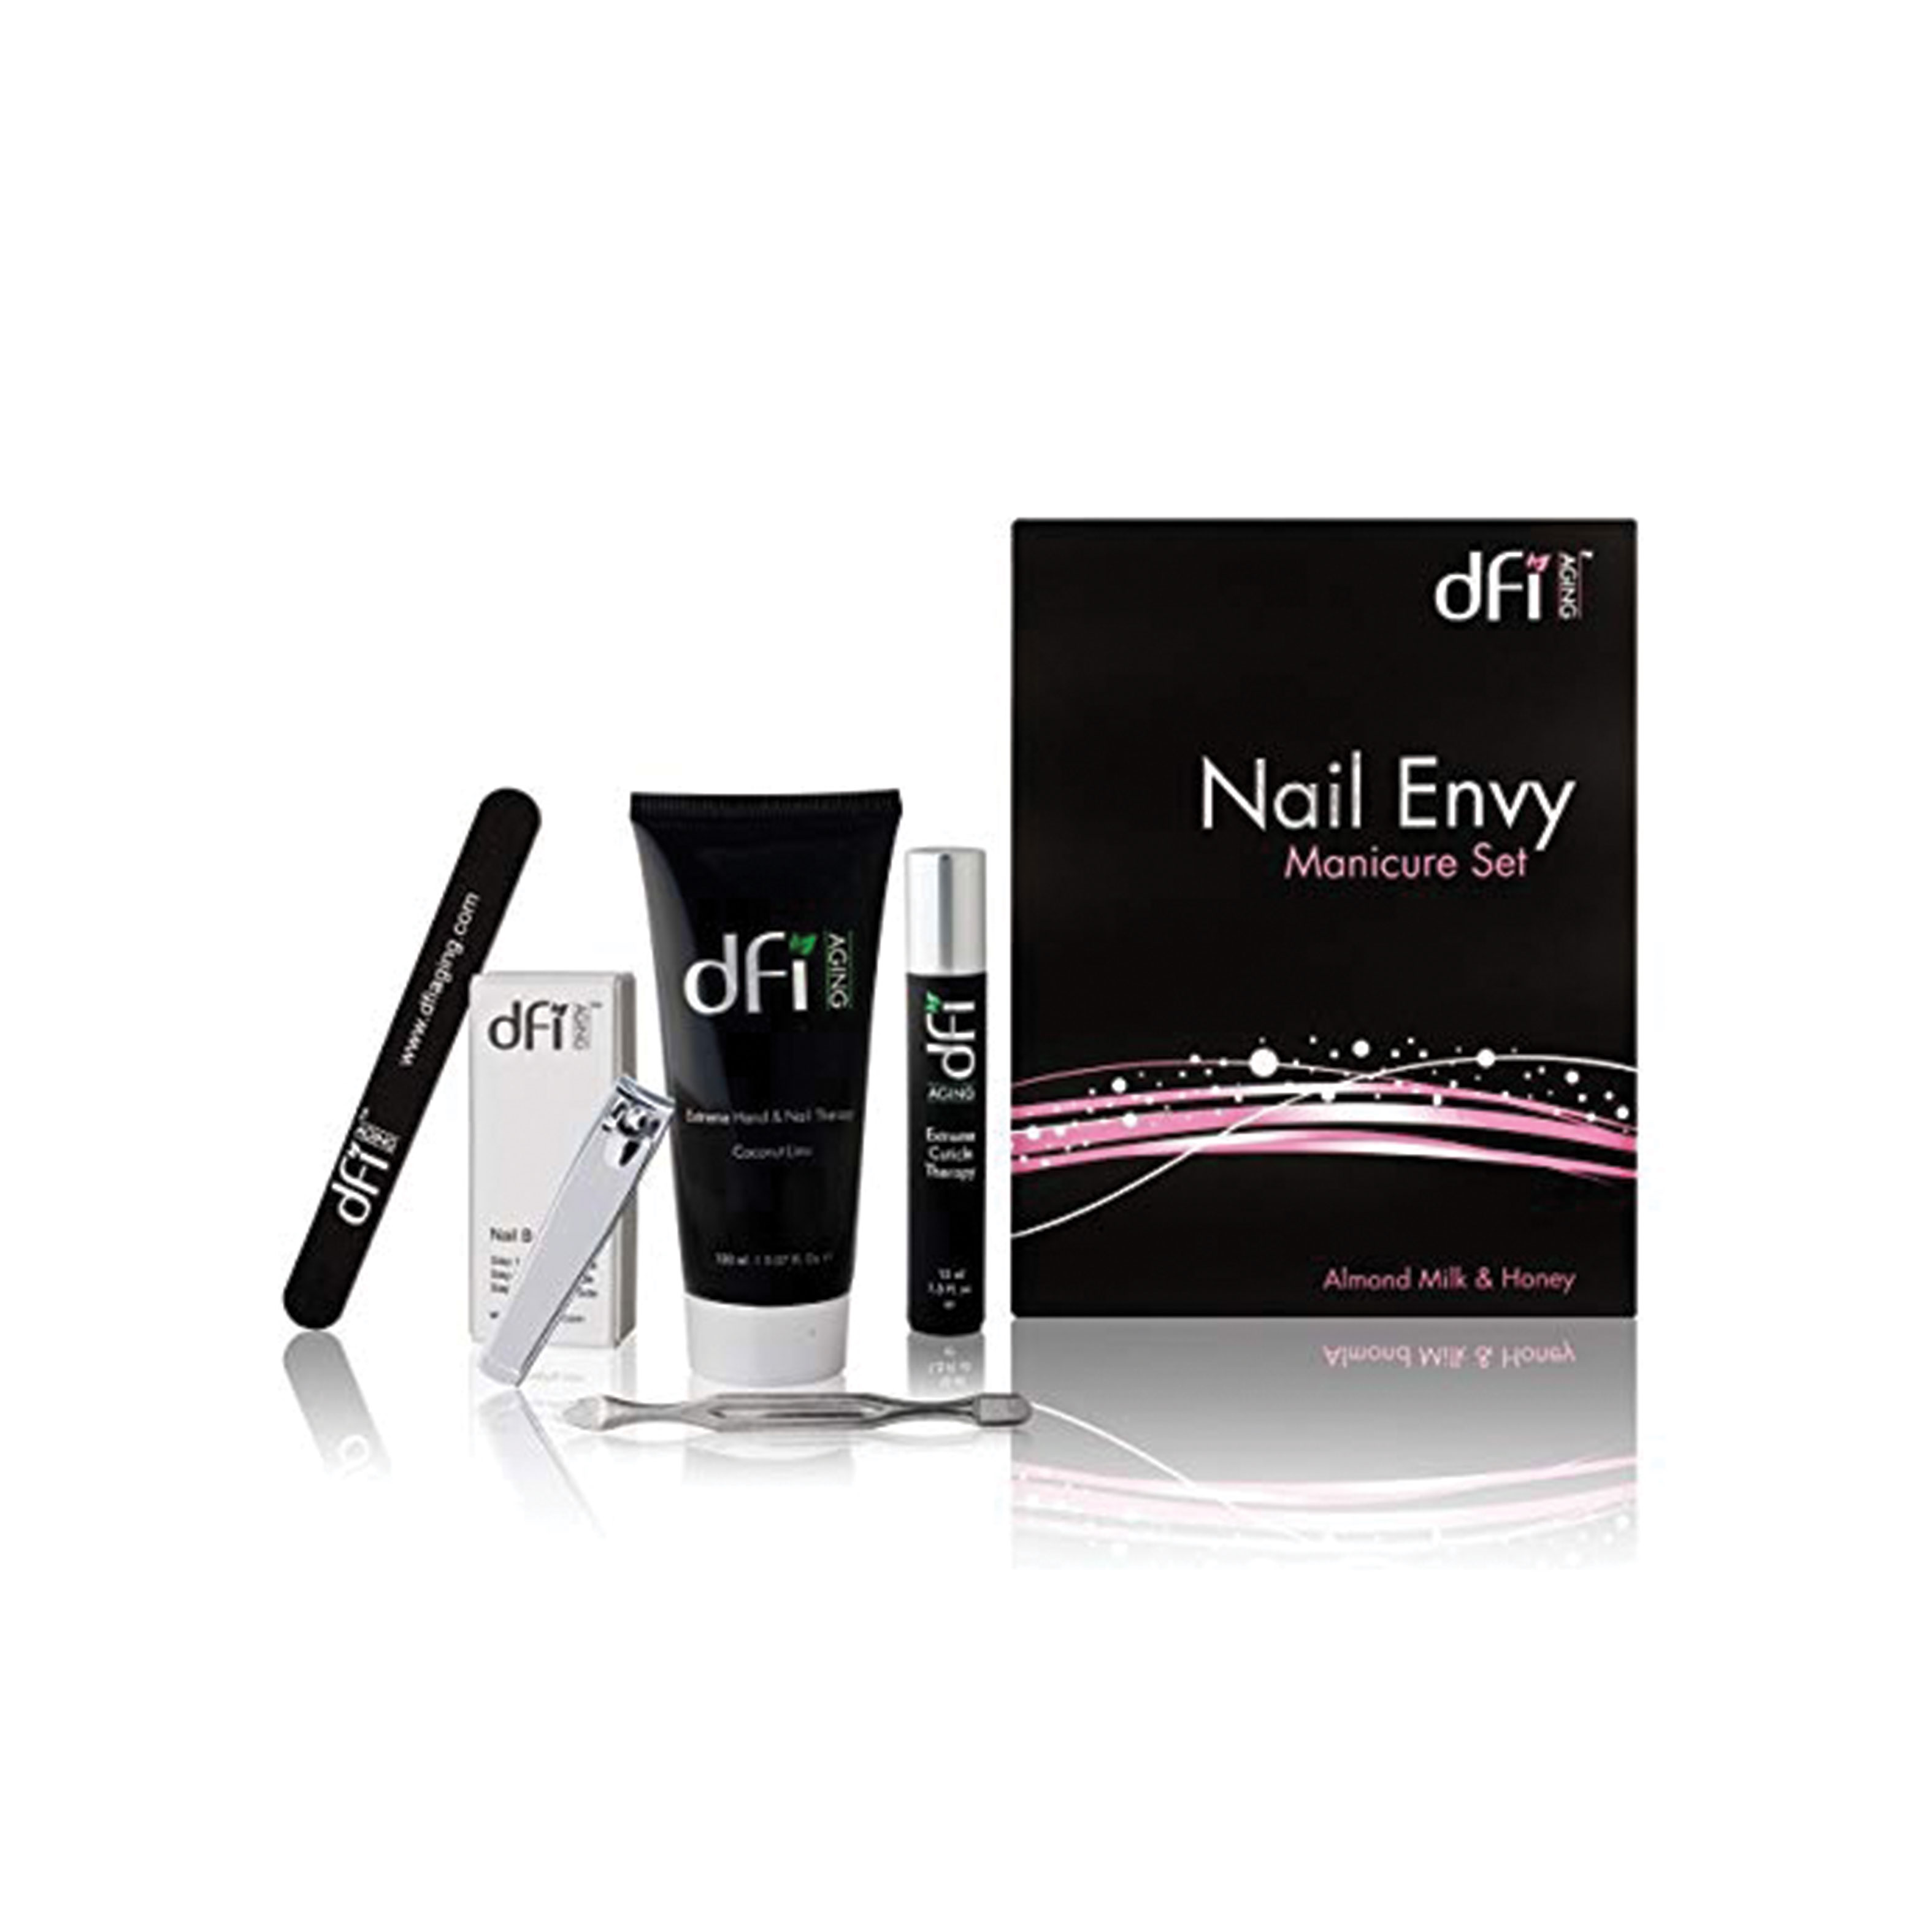 Product Branding and Packaging Design for dfi Aging Skincare's Nail Envy Kit